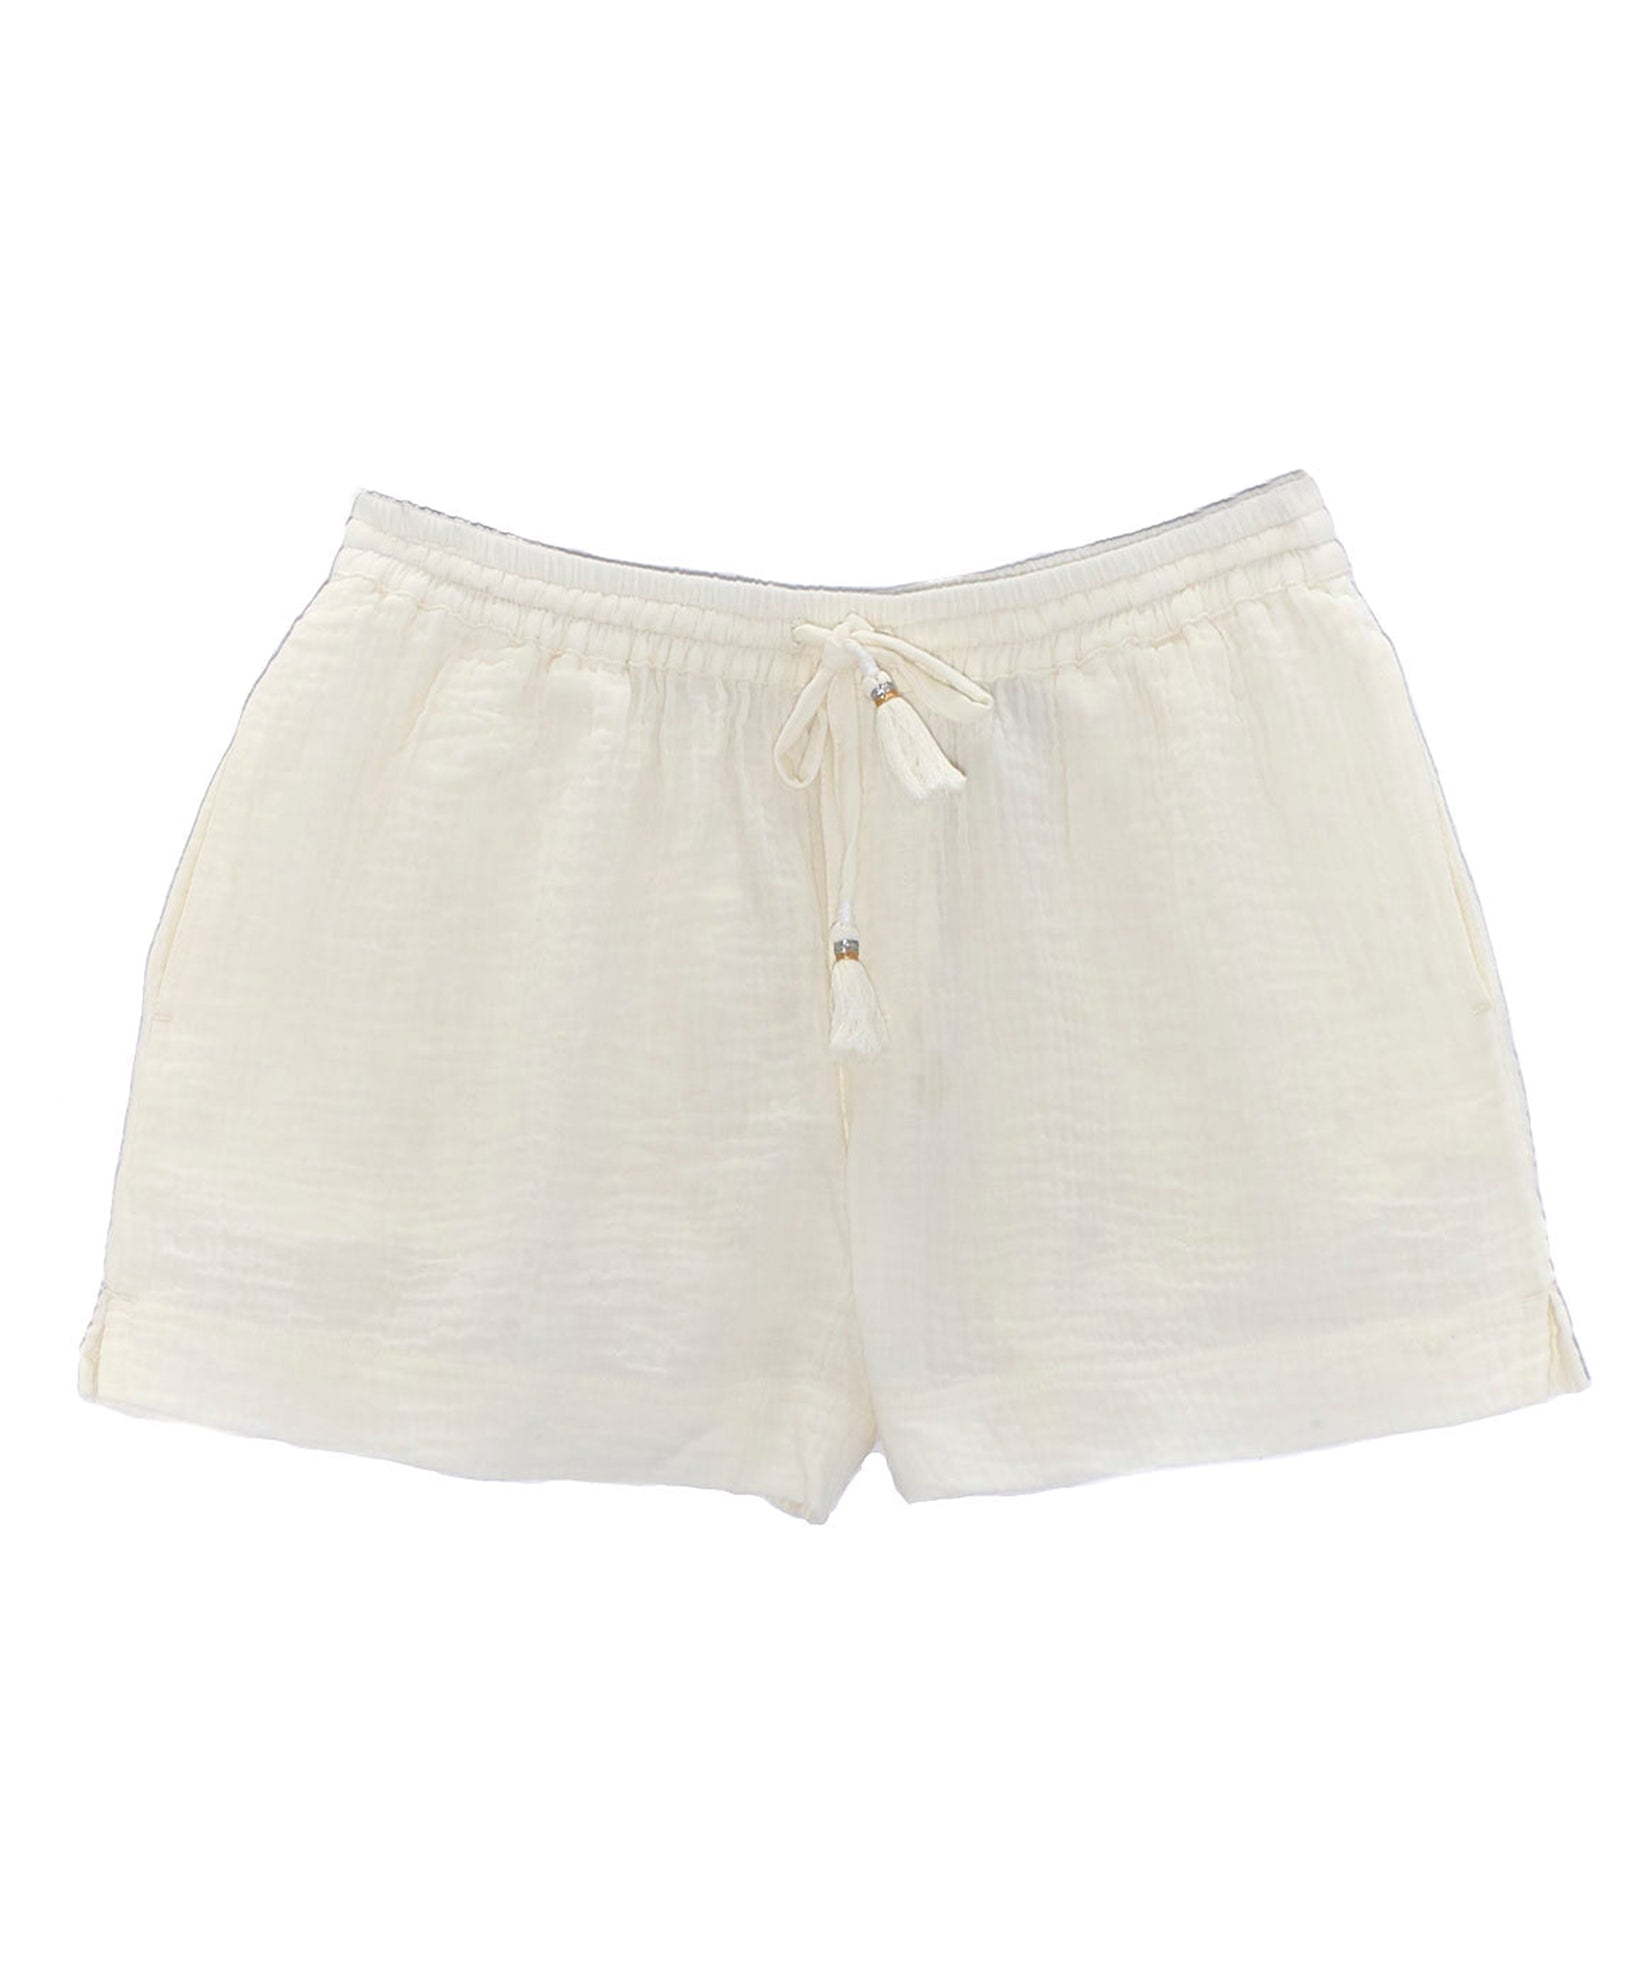 Double Gauze Beach Shorts in color Cream